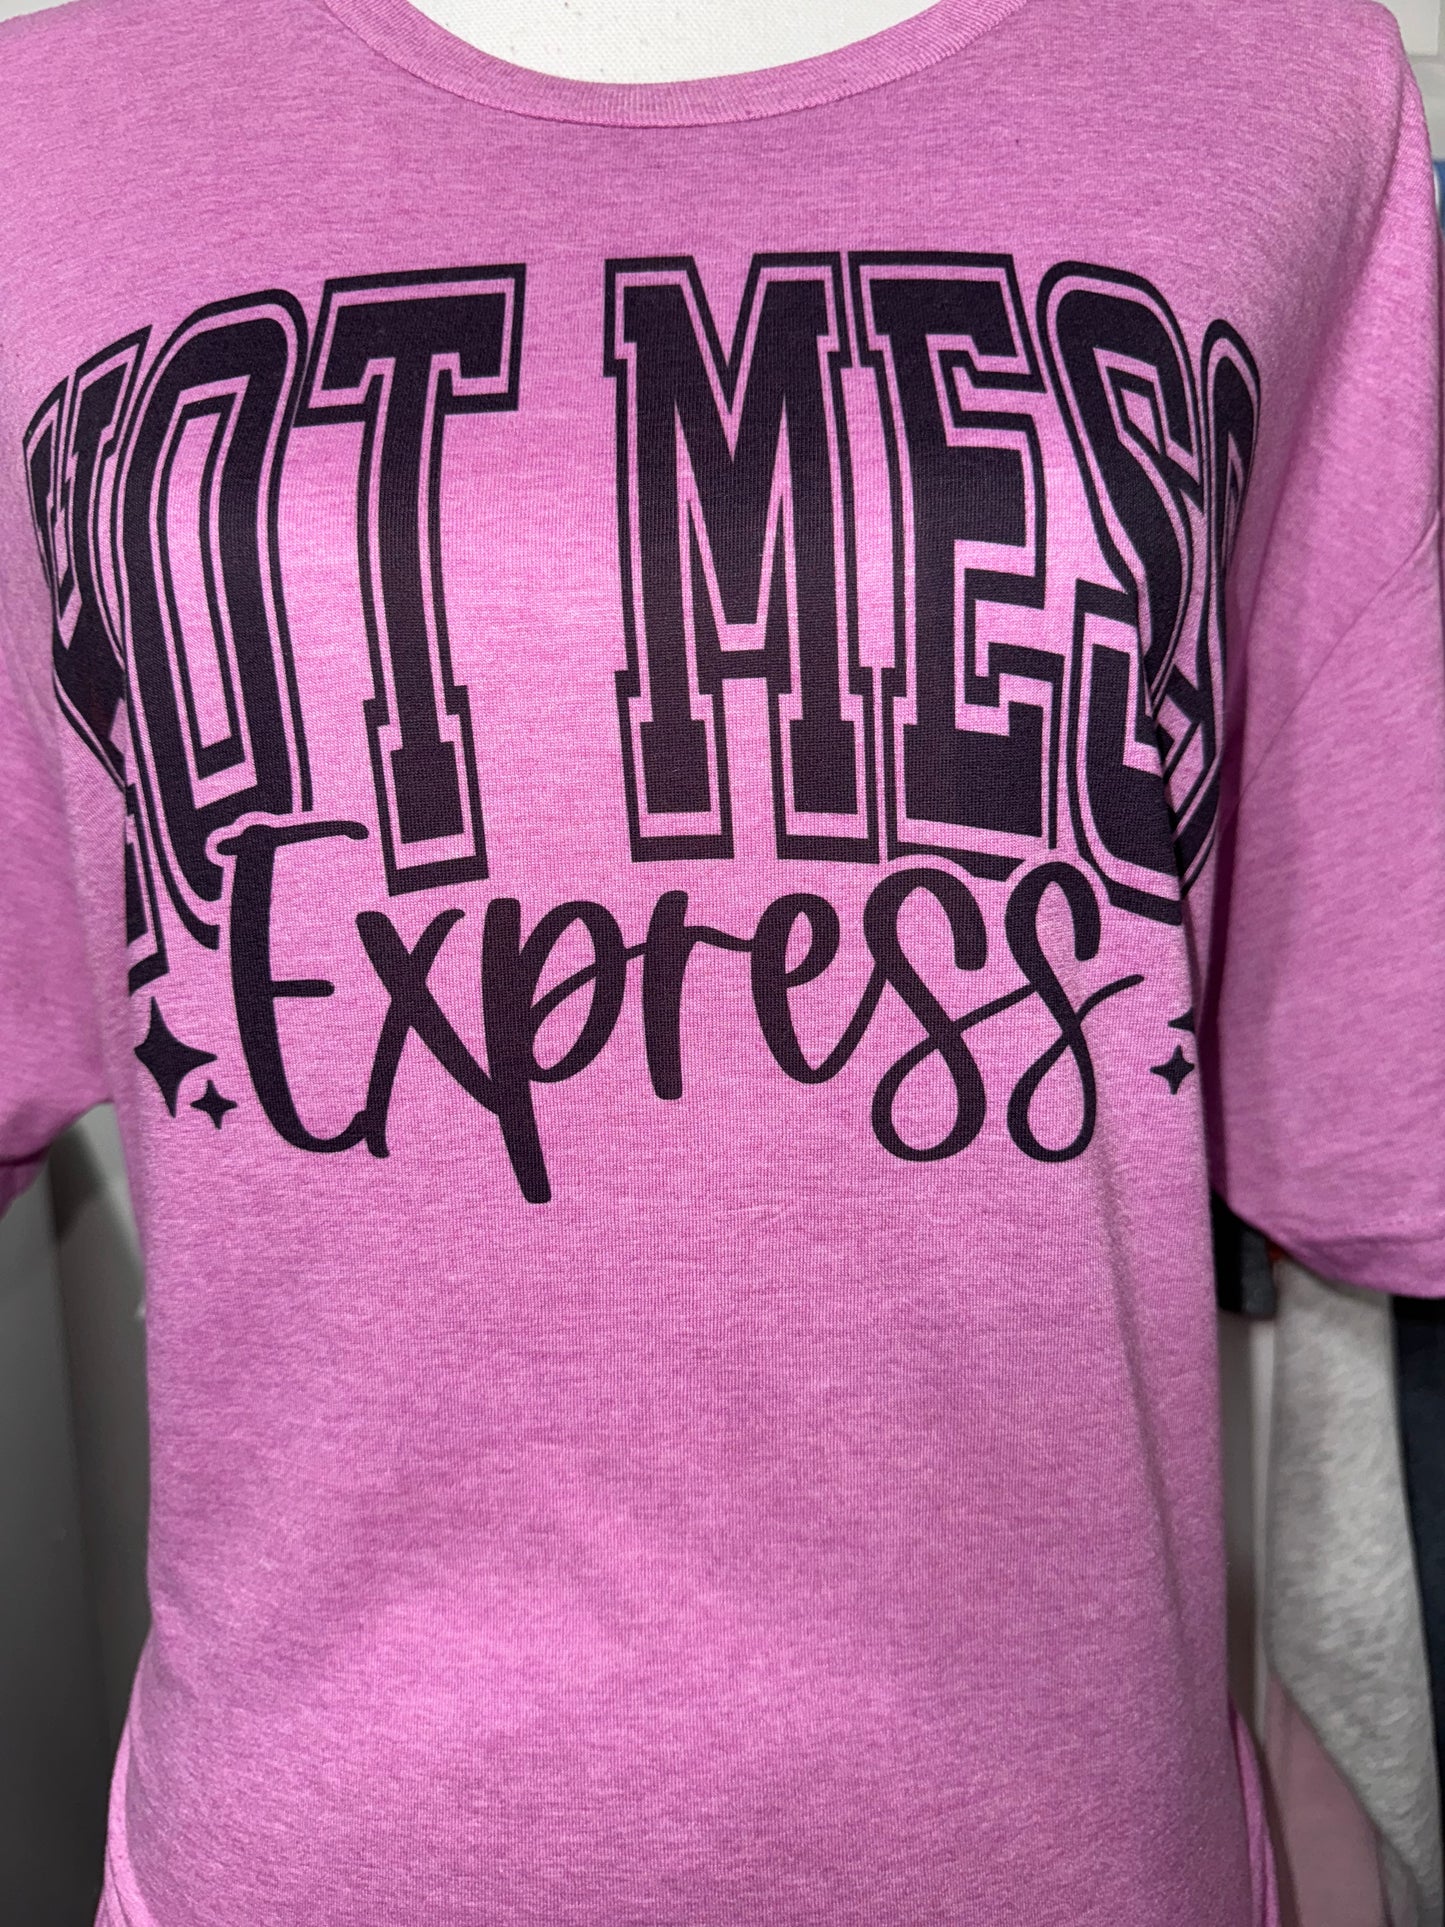 Hot Mess Express tee